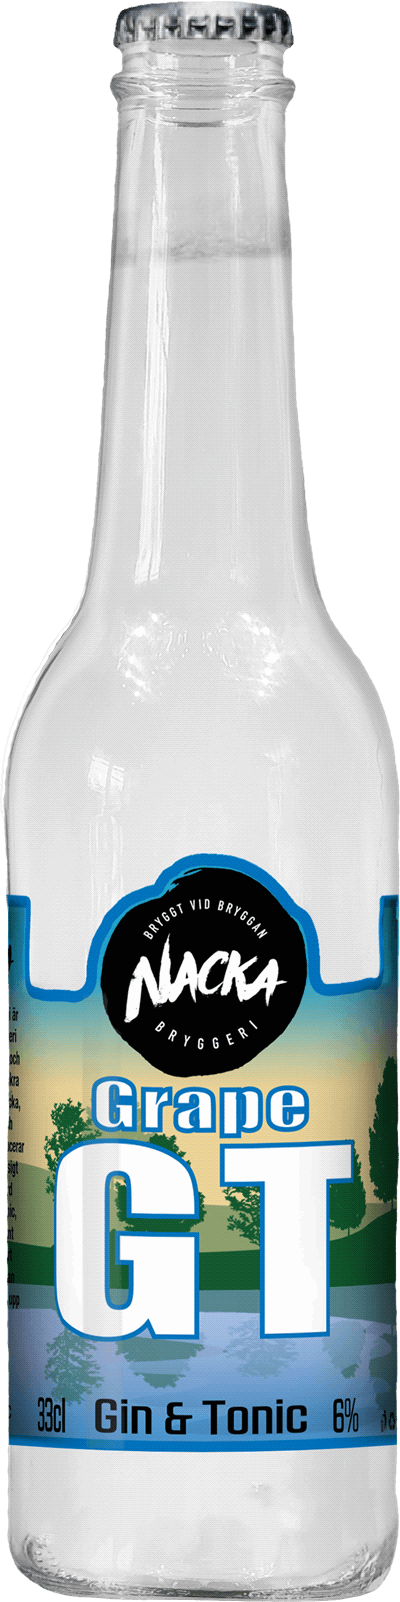 Nacka Bryggeri Nacka Grape GT Gin & Tonic